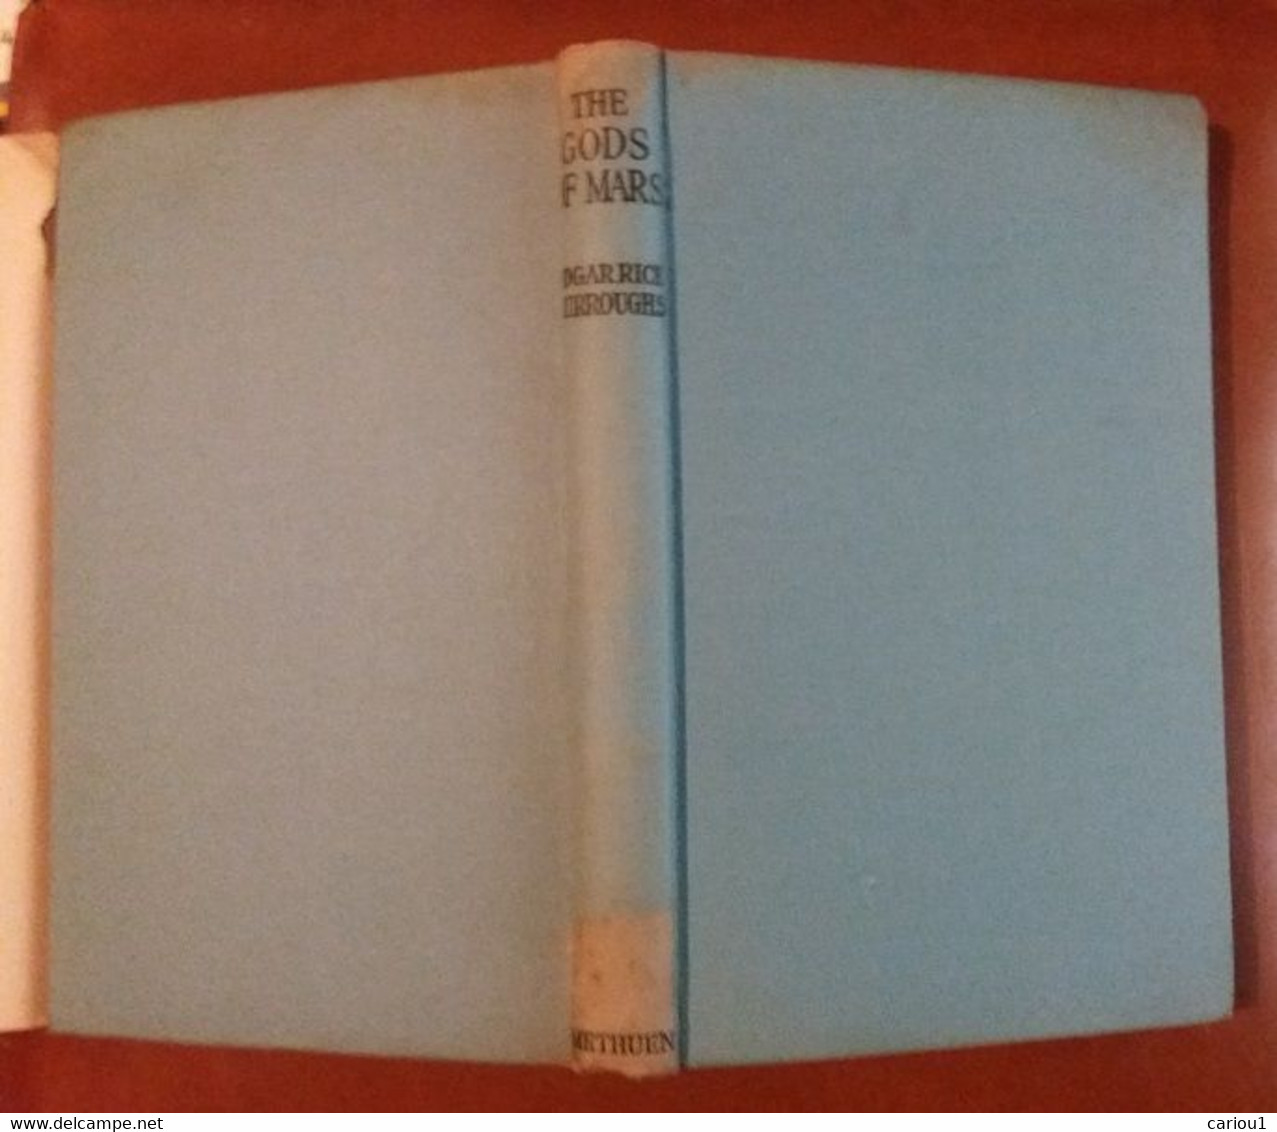 C1 Edgar Rice Burroughs THE GODS OF MARS Methuen 1942 JAQUETTE Dust Jacket PORT INCLUS France - Science Fiction